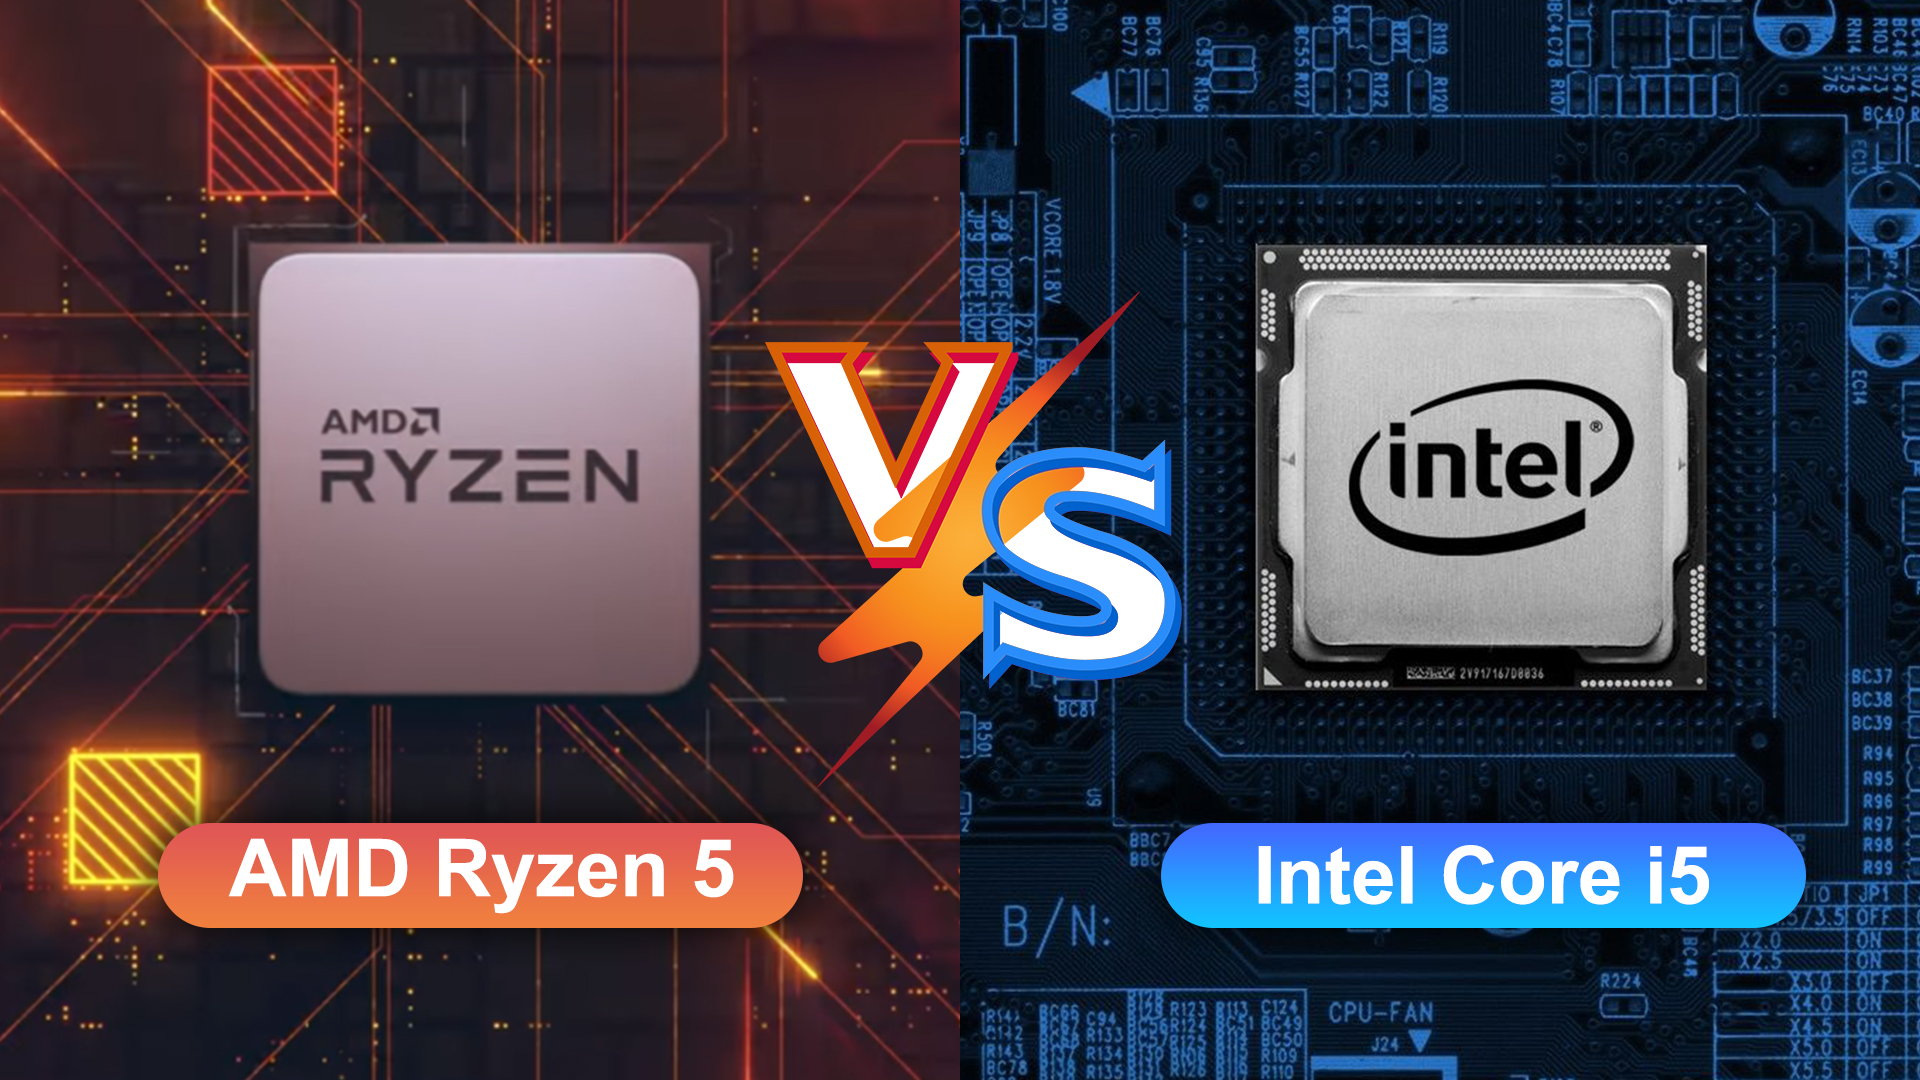 Baan overhead katje Intel Core i5 vs. AMD Ryzen 5: Which One Is the Better CPU